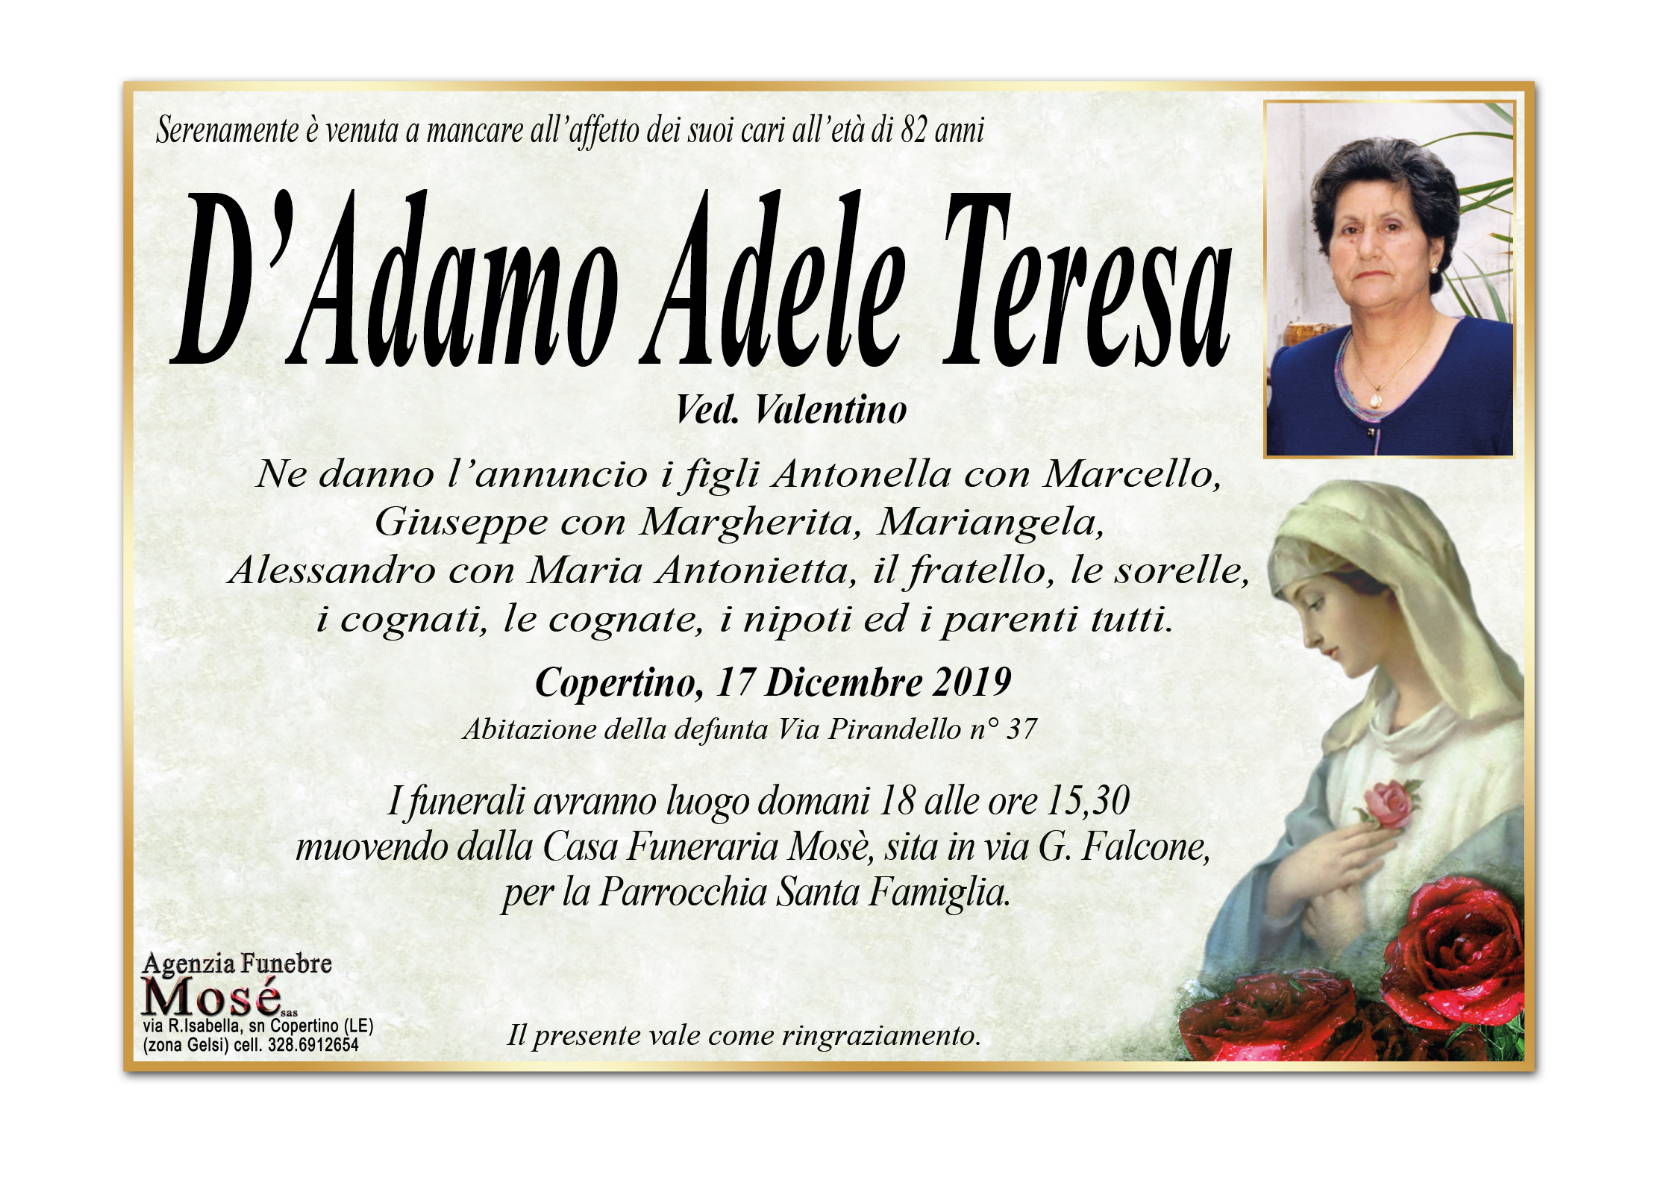 Adele Teresa D’Adamo